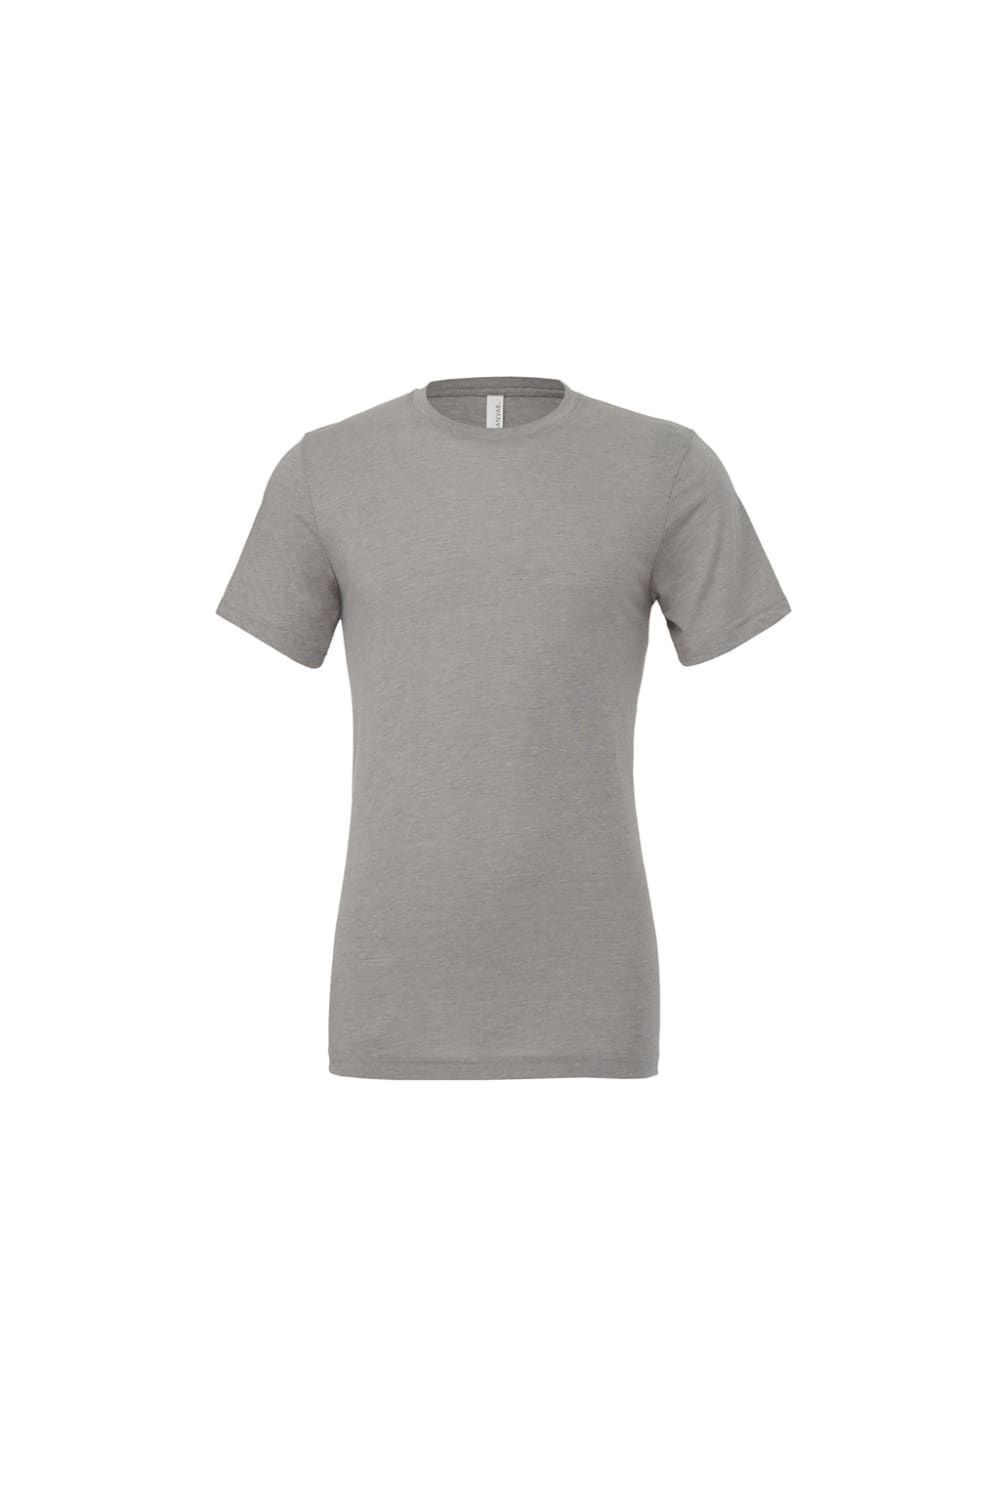 Bella + Canvas Adults Unisex Tri-Blend T-Shirt (Athletic Gray Triblend)